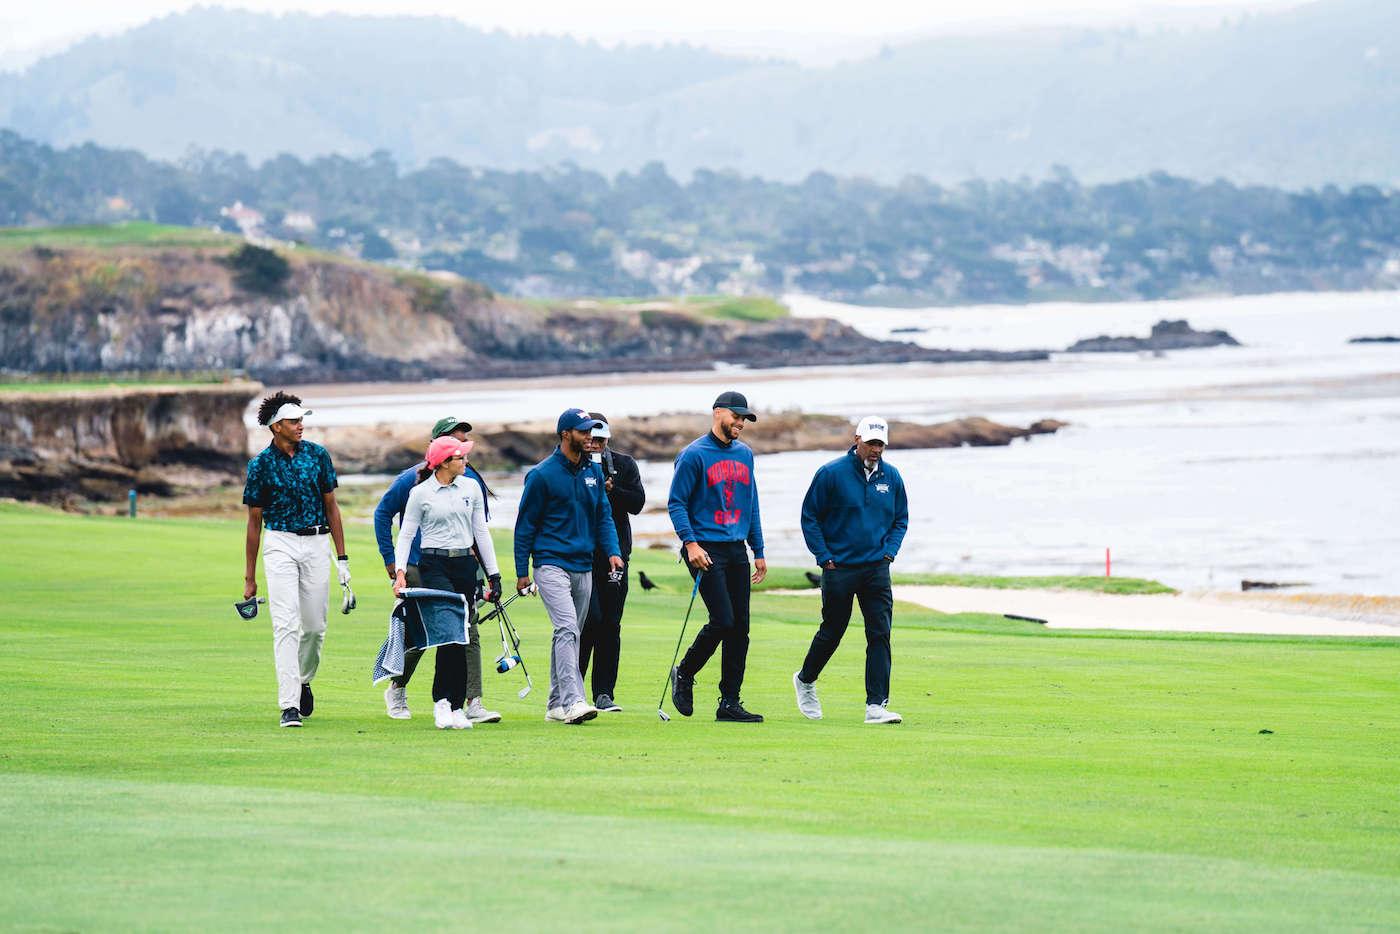 Howard Golf team walking along a coastal golf course